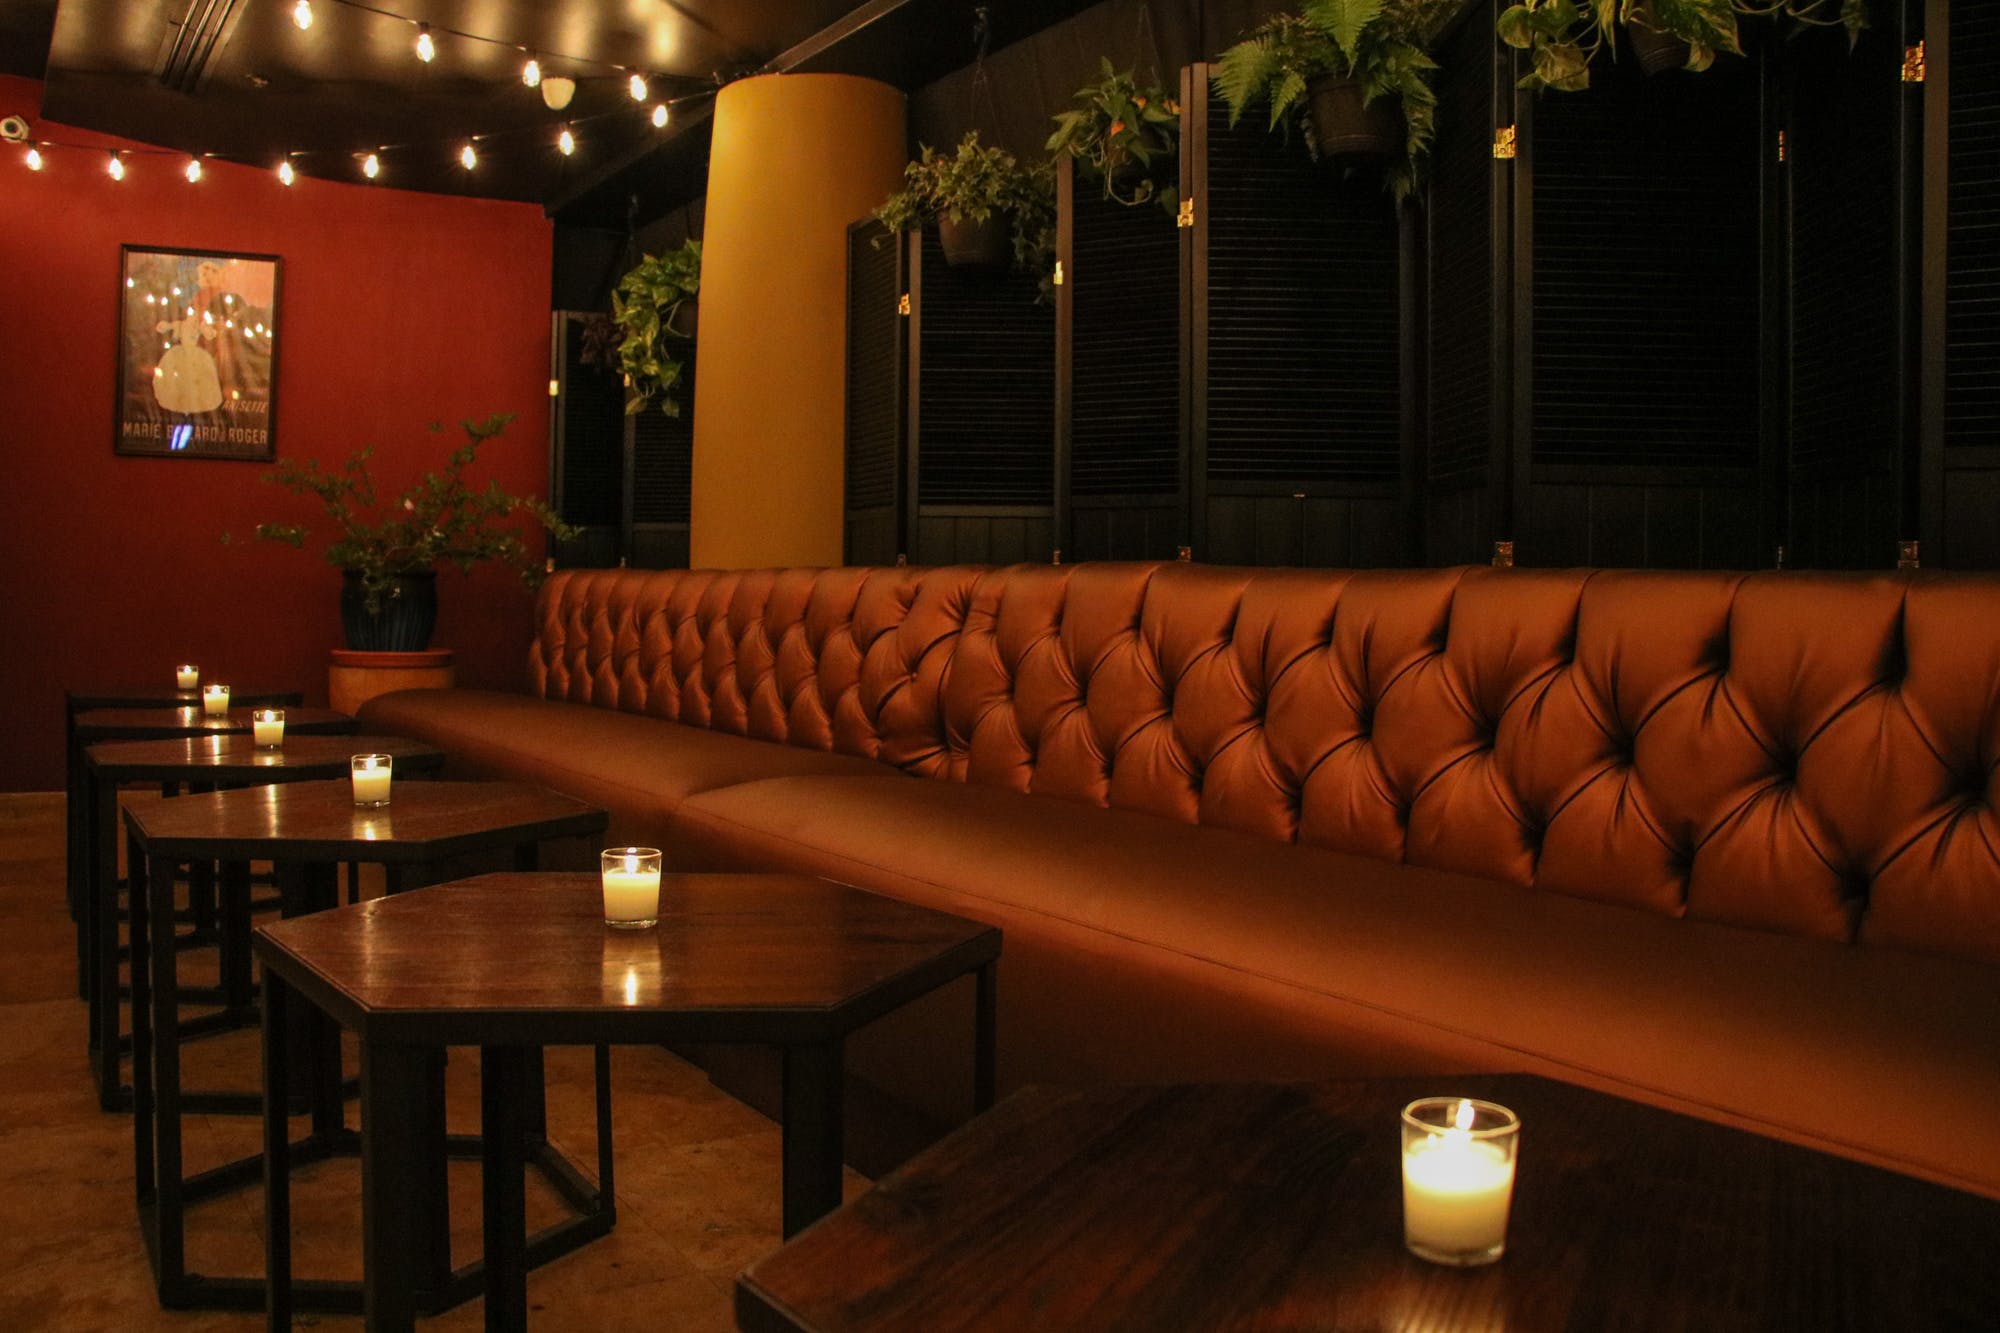 The 20 Best Bars In Miami - Miami - The Infatuation